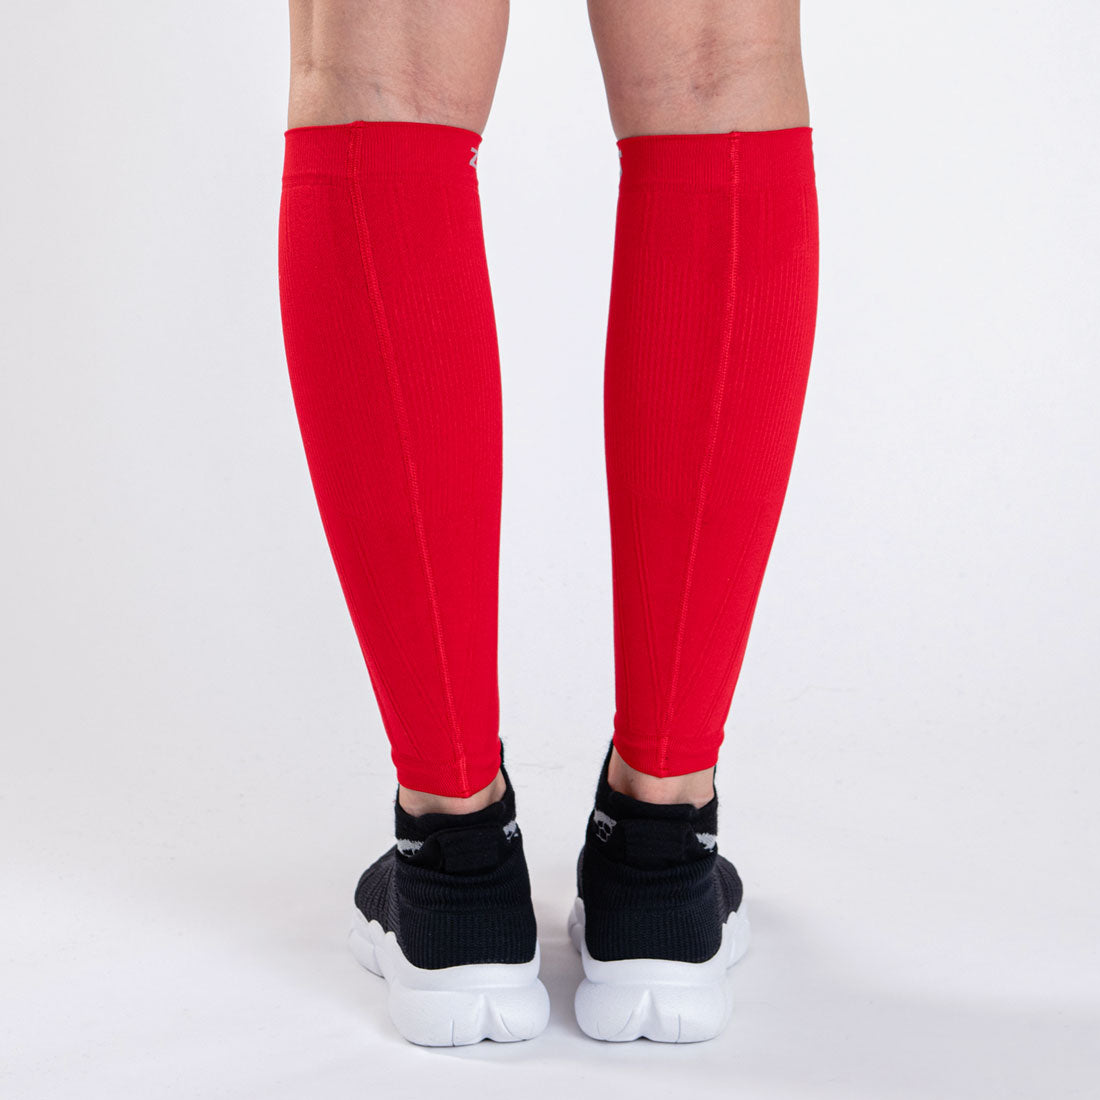 Zensah Compression Leg Sleeves (Red)